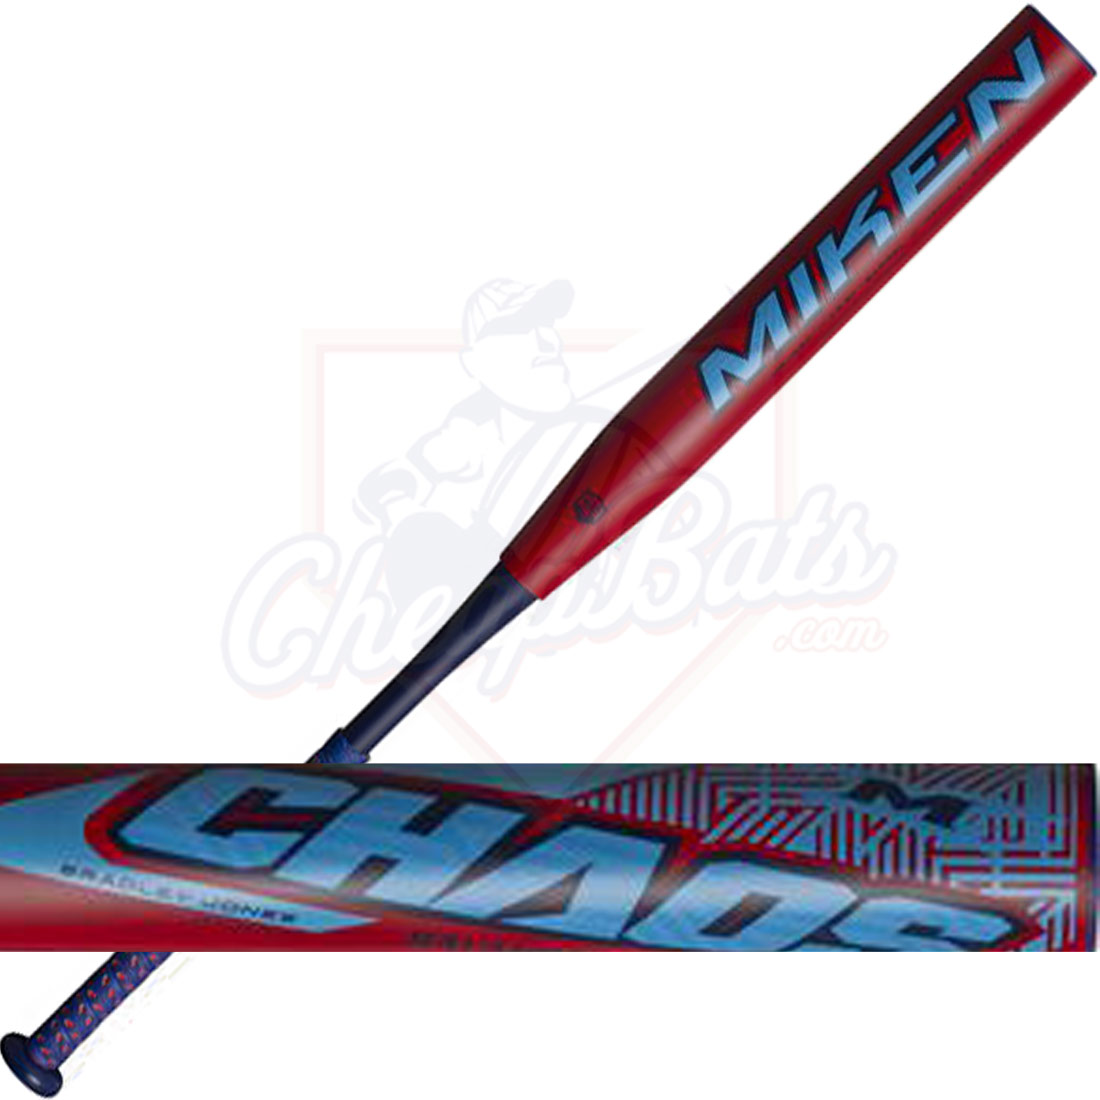 2022 Worth Chaos Bradley Jones Slowpitch Softball Bat Balanced ASA USA MBJ22A